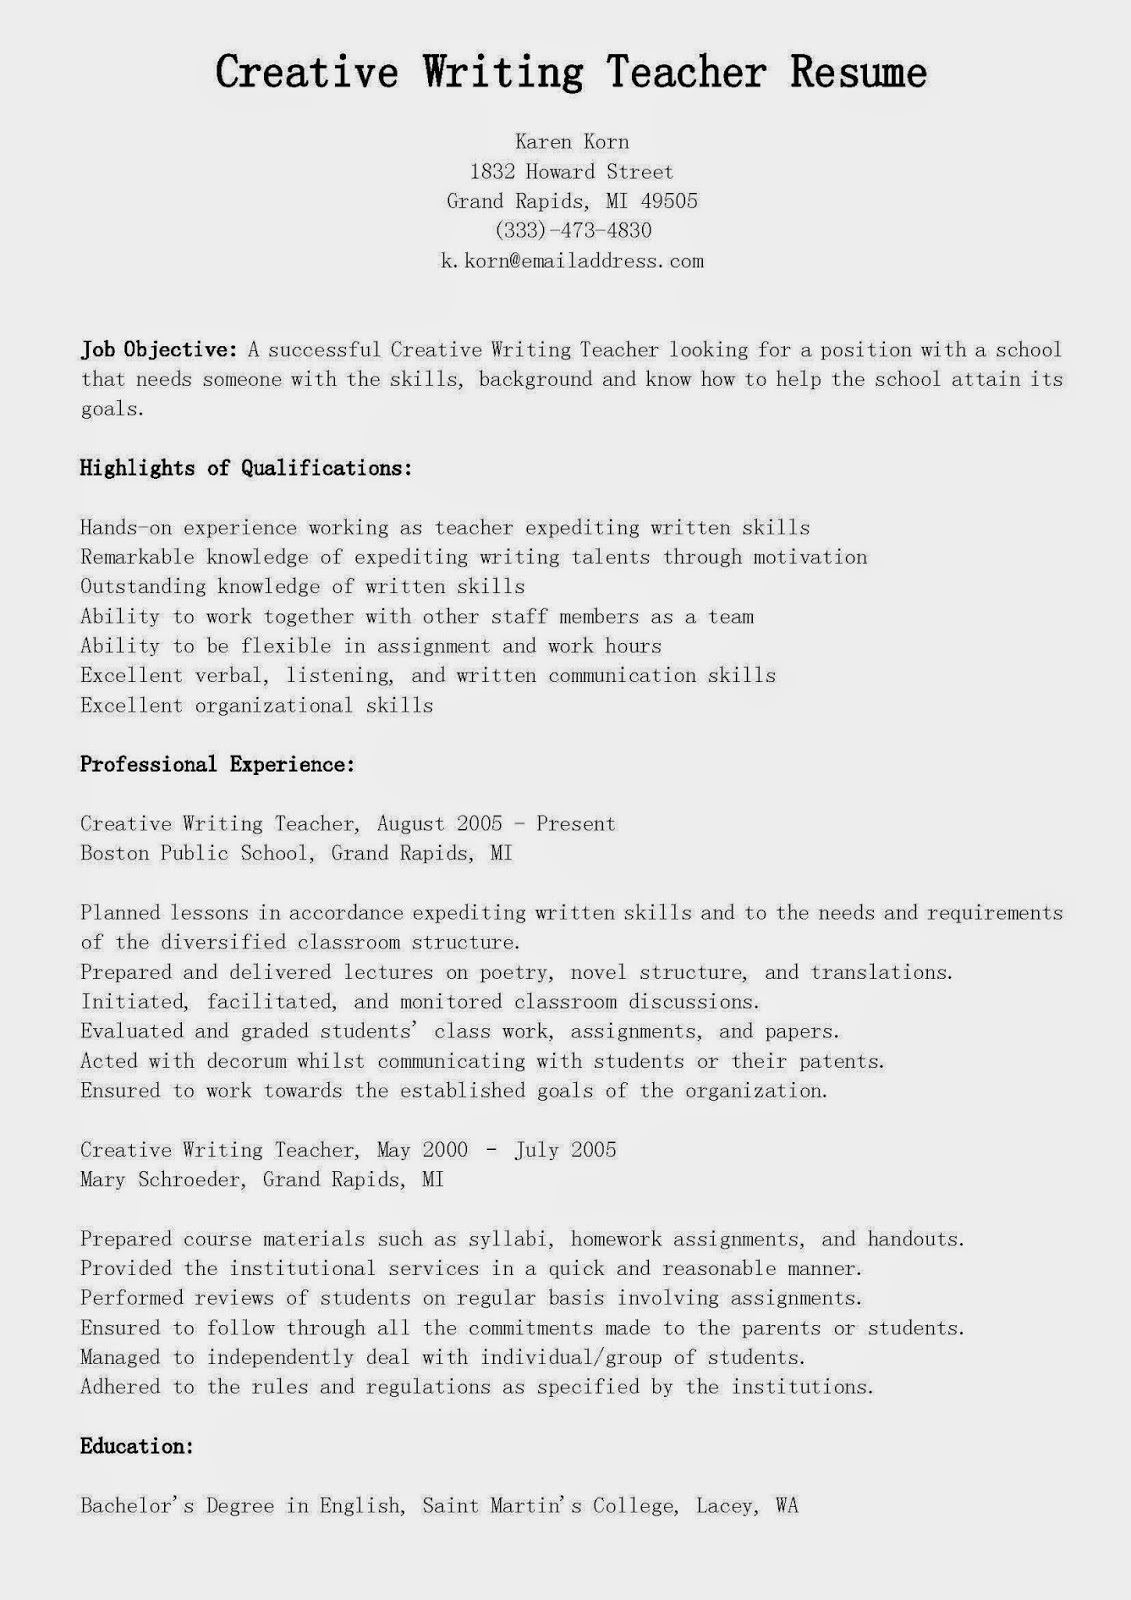 Creative resume service